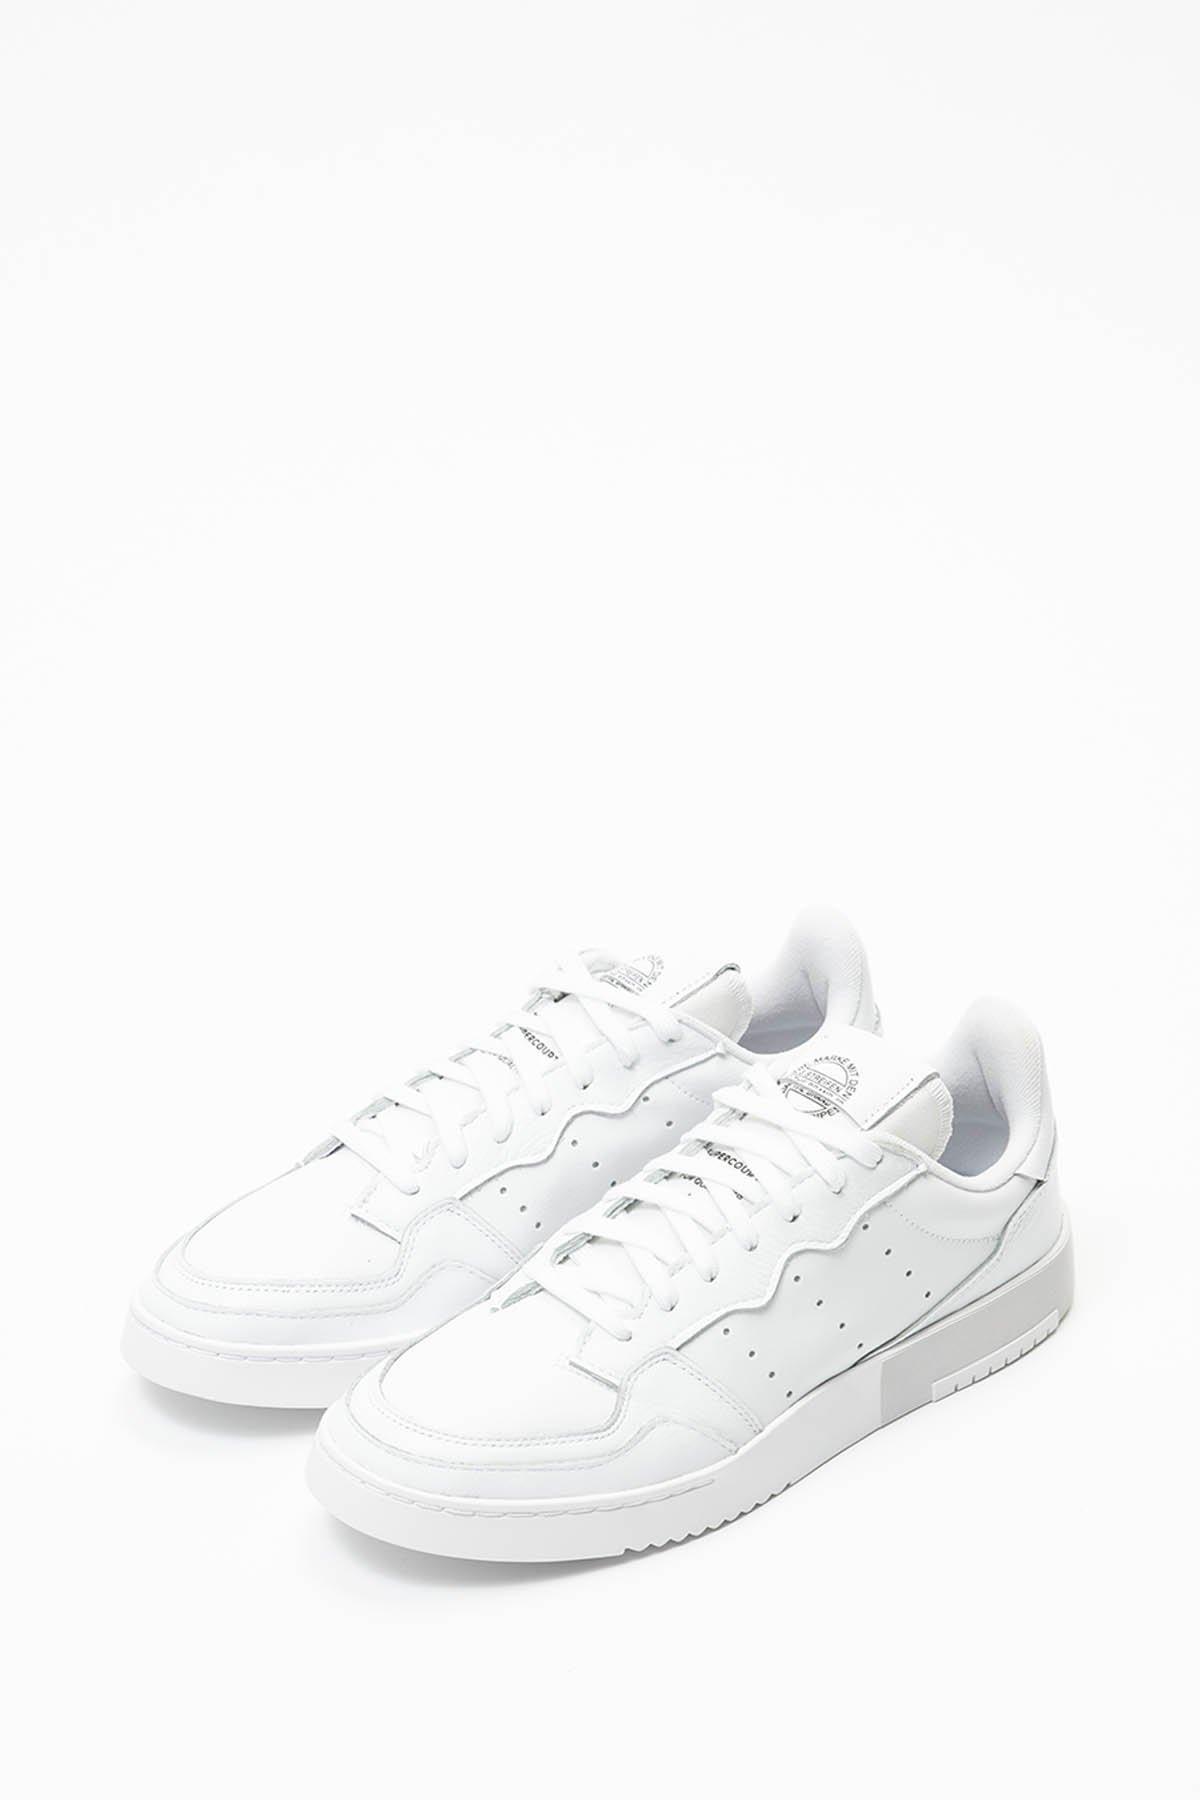 adidas Originals Rubber Supercourt in White/Blue (White) for Men | Lyst